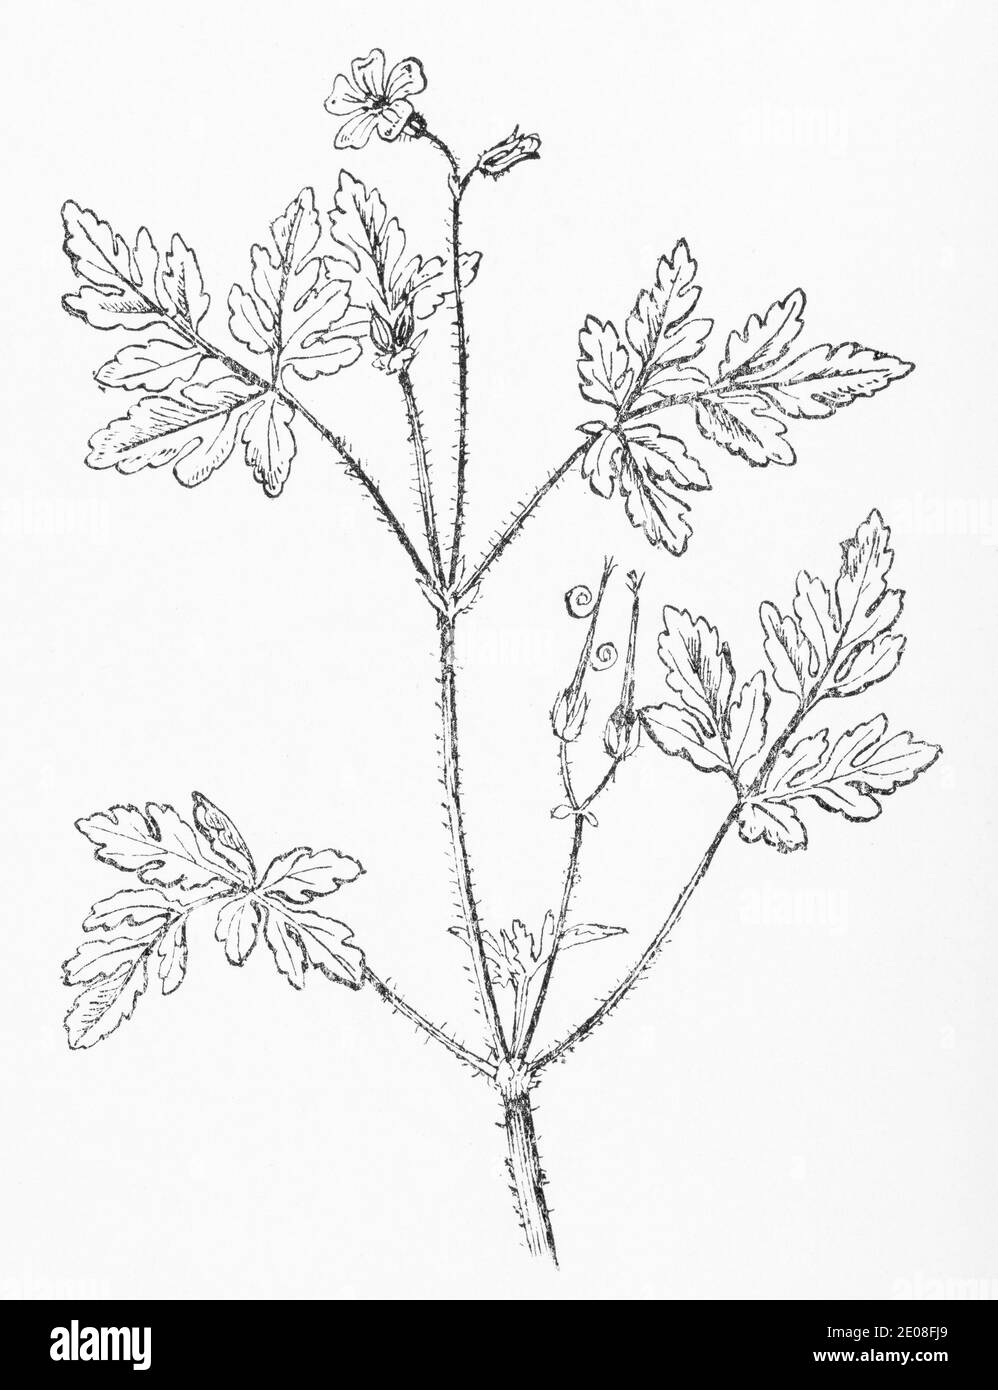 Old botanical illustration engraving of Herb Robert / Geranium robertianum. Traditional medicinal herbal plant. See Notes Stock Photo